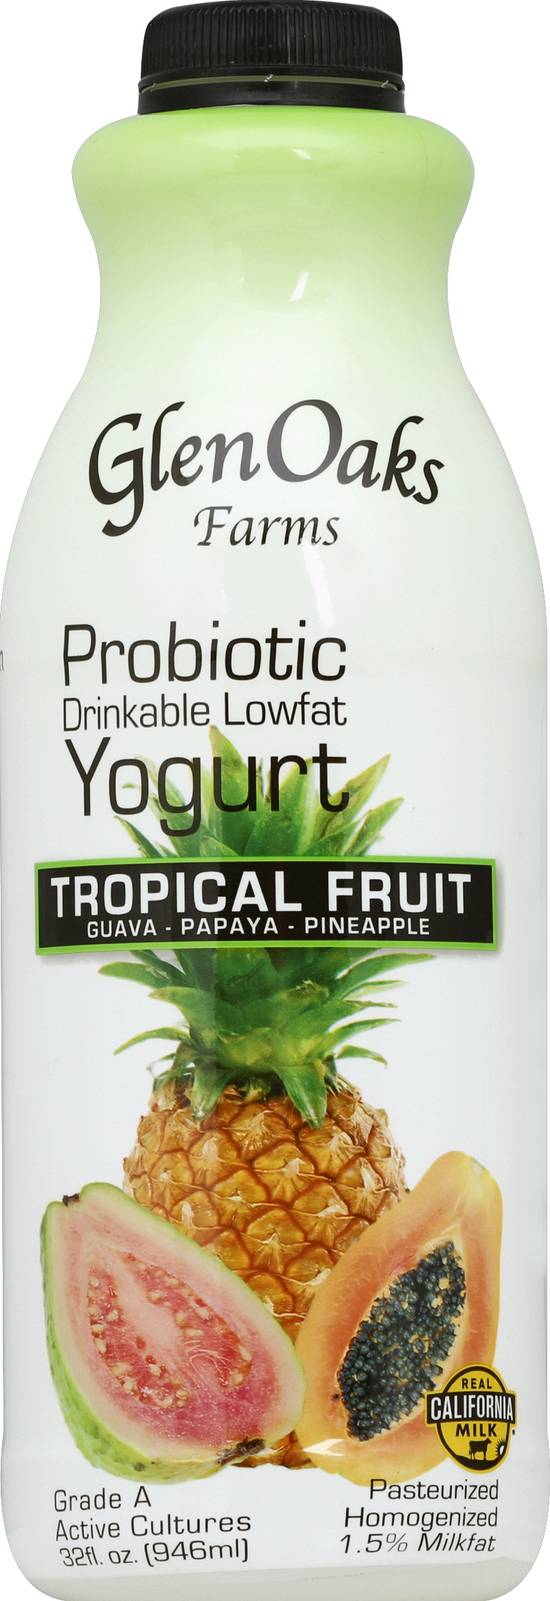 Glenoaks Farms Lowfat Probiotic Tropical Fruit Yogurt